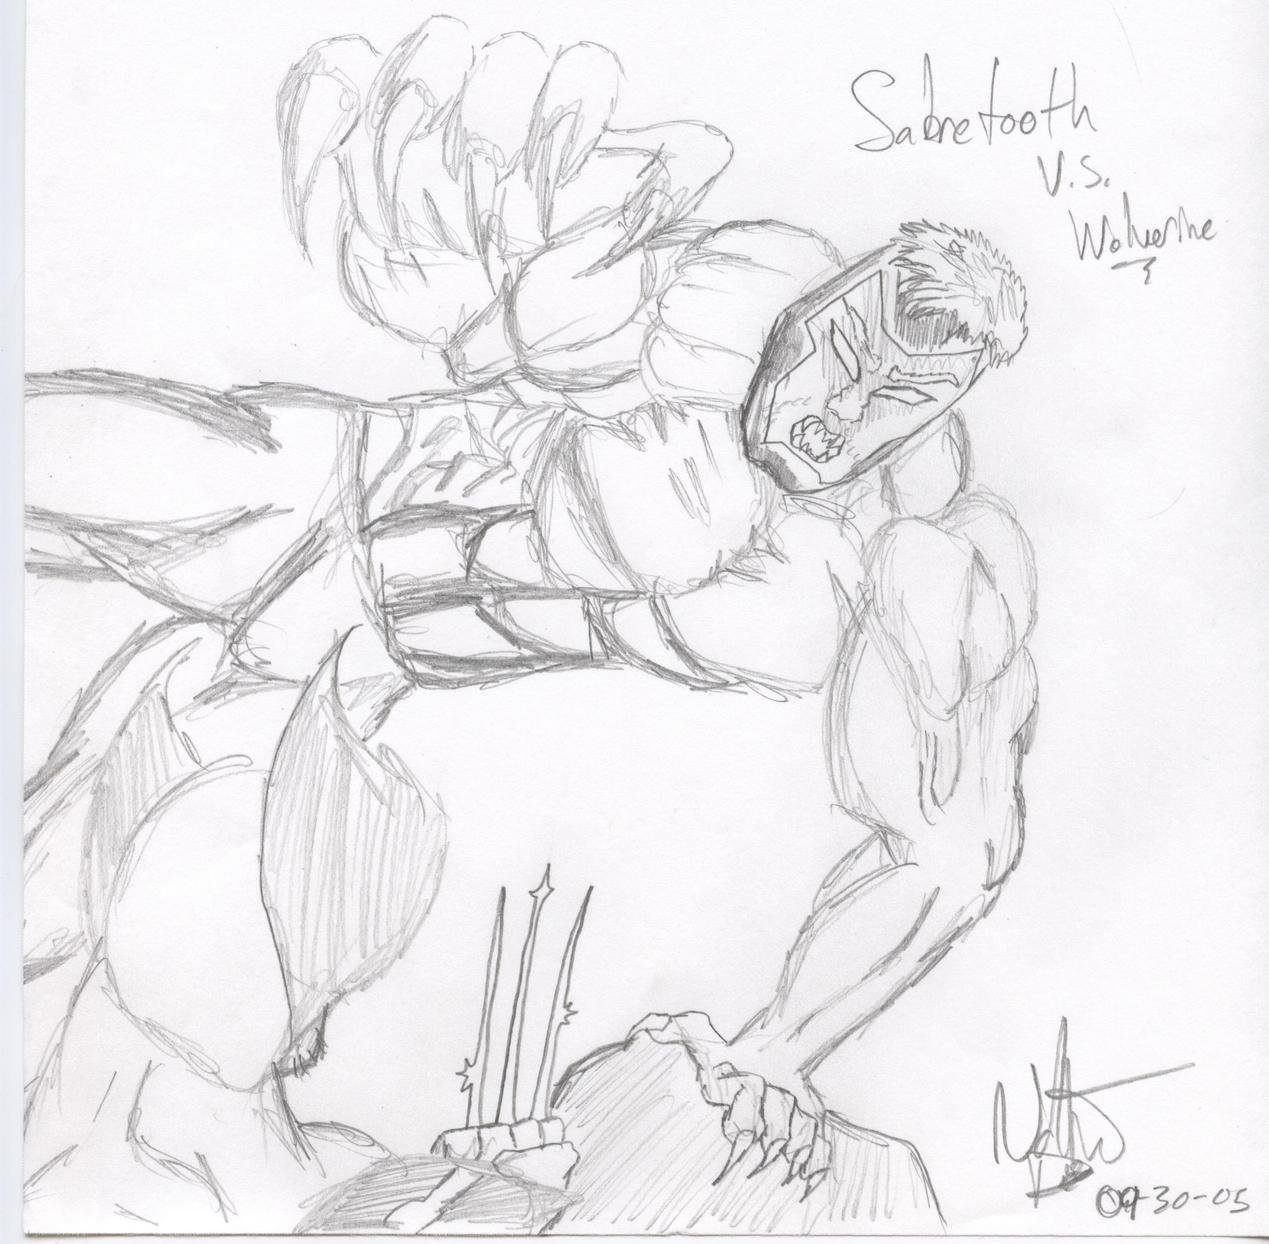 Sabretooth V.S. Wolverine by PFC